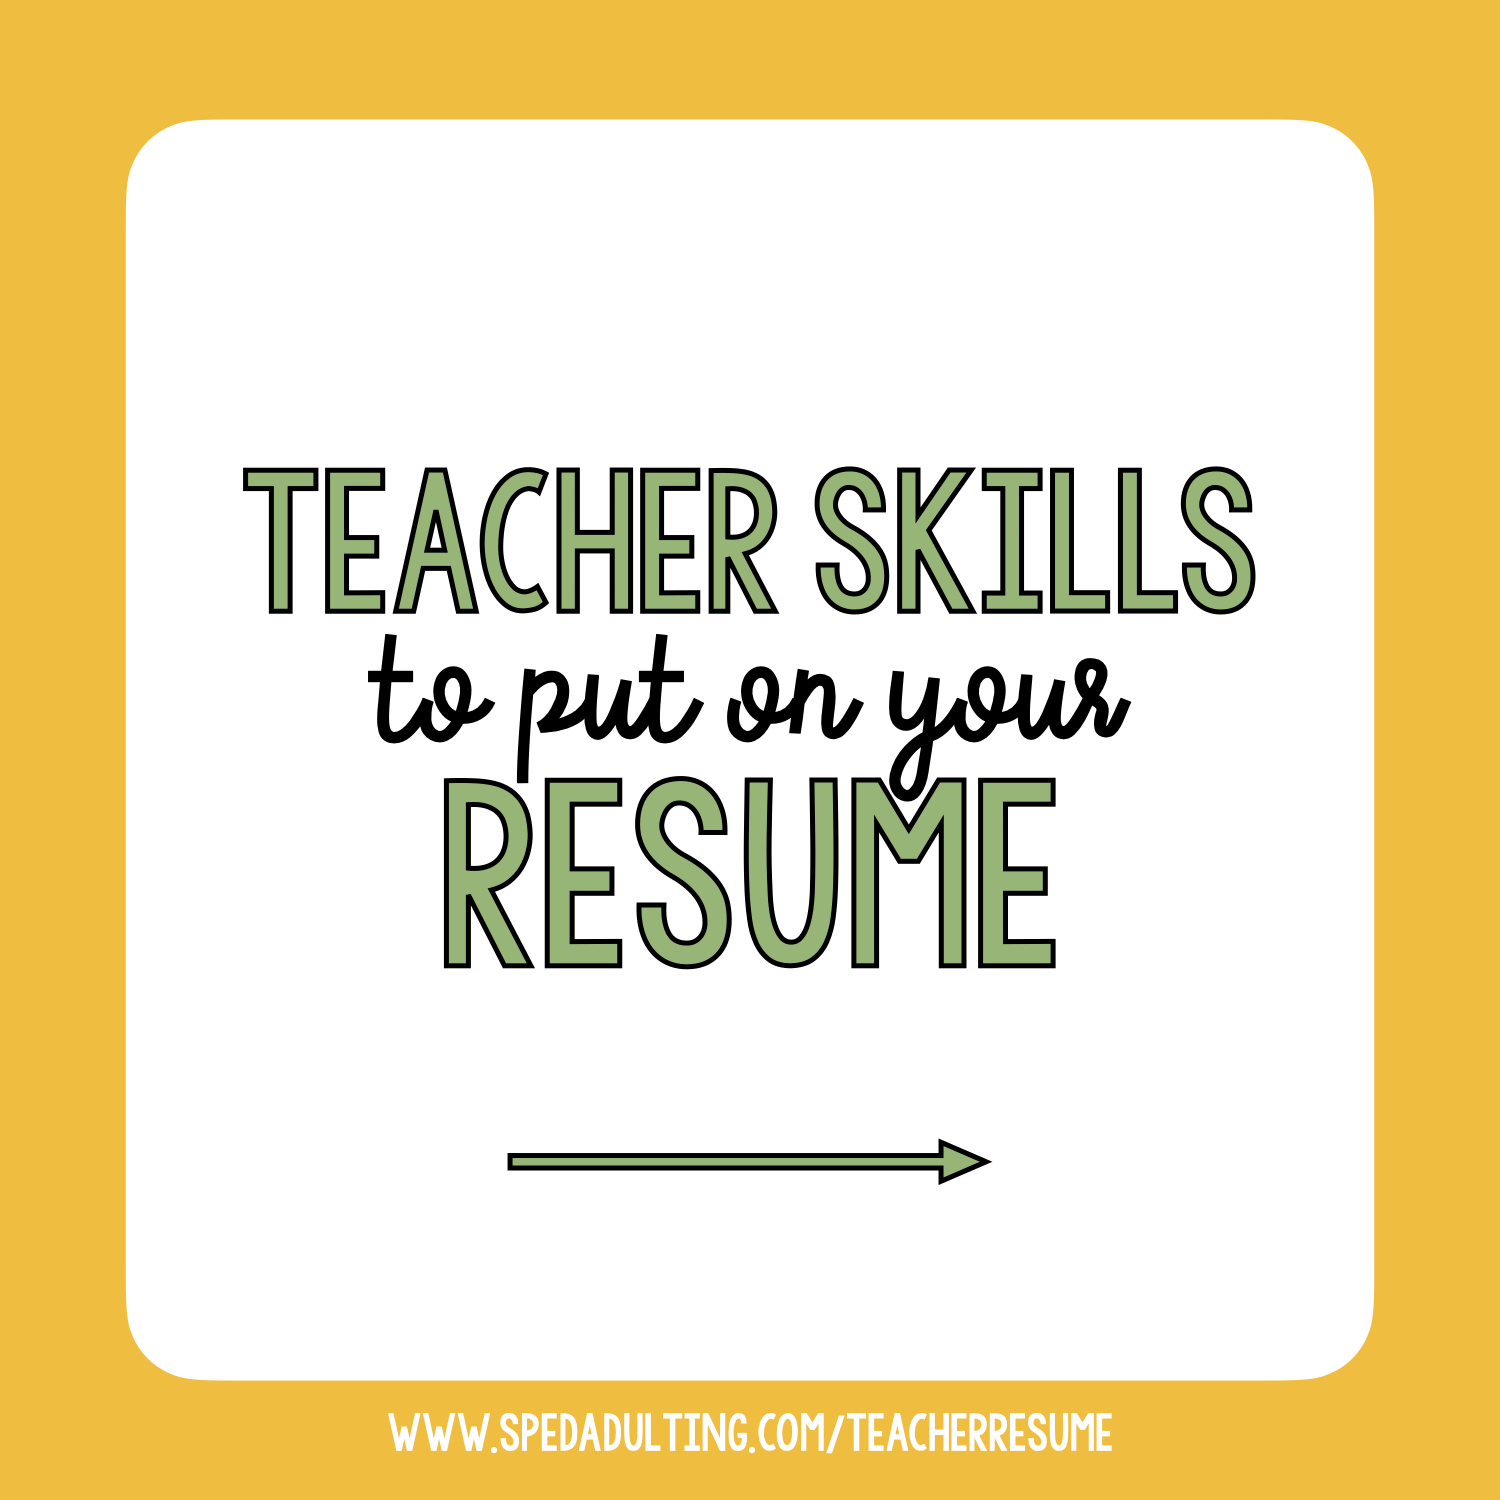 BLOG: Skills for Teachers to Put on their Resume